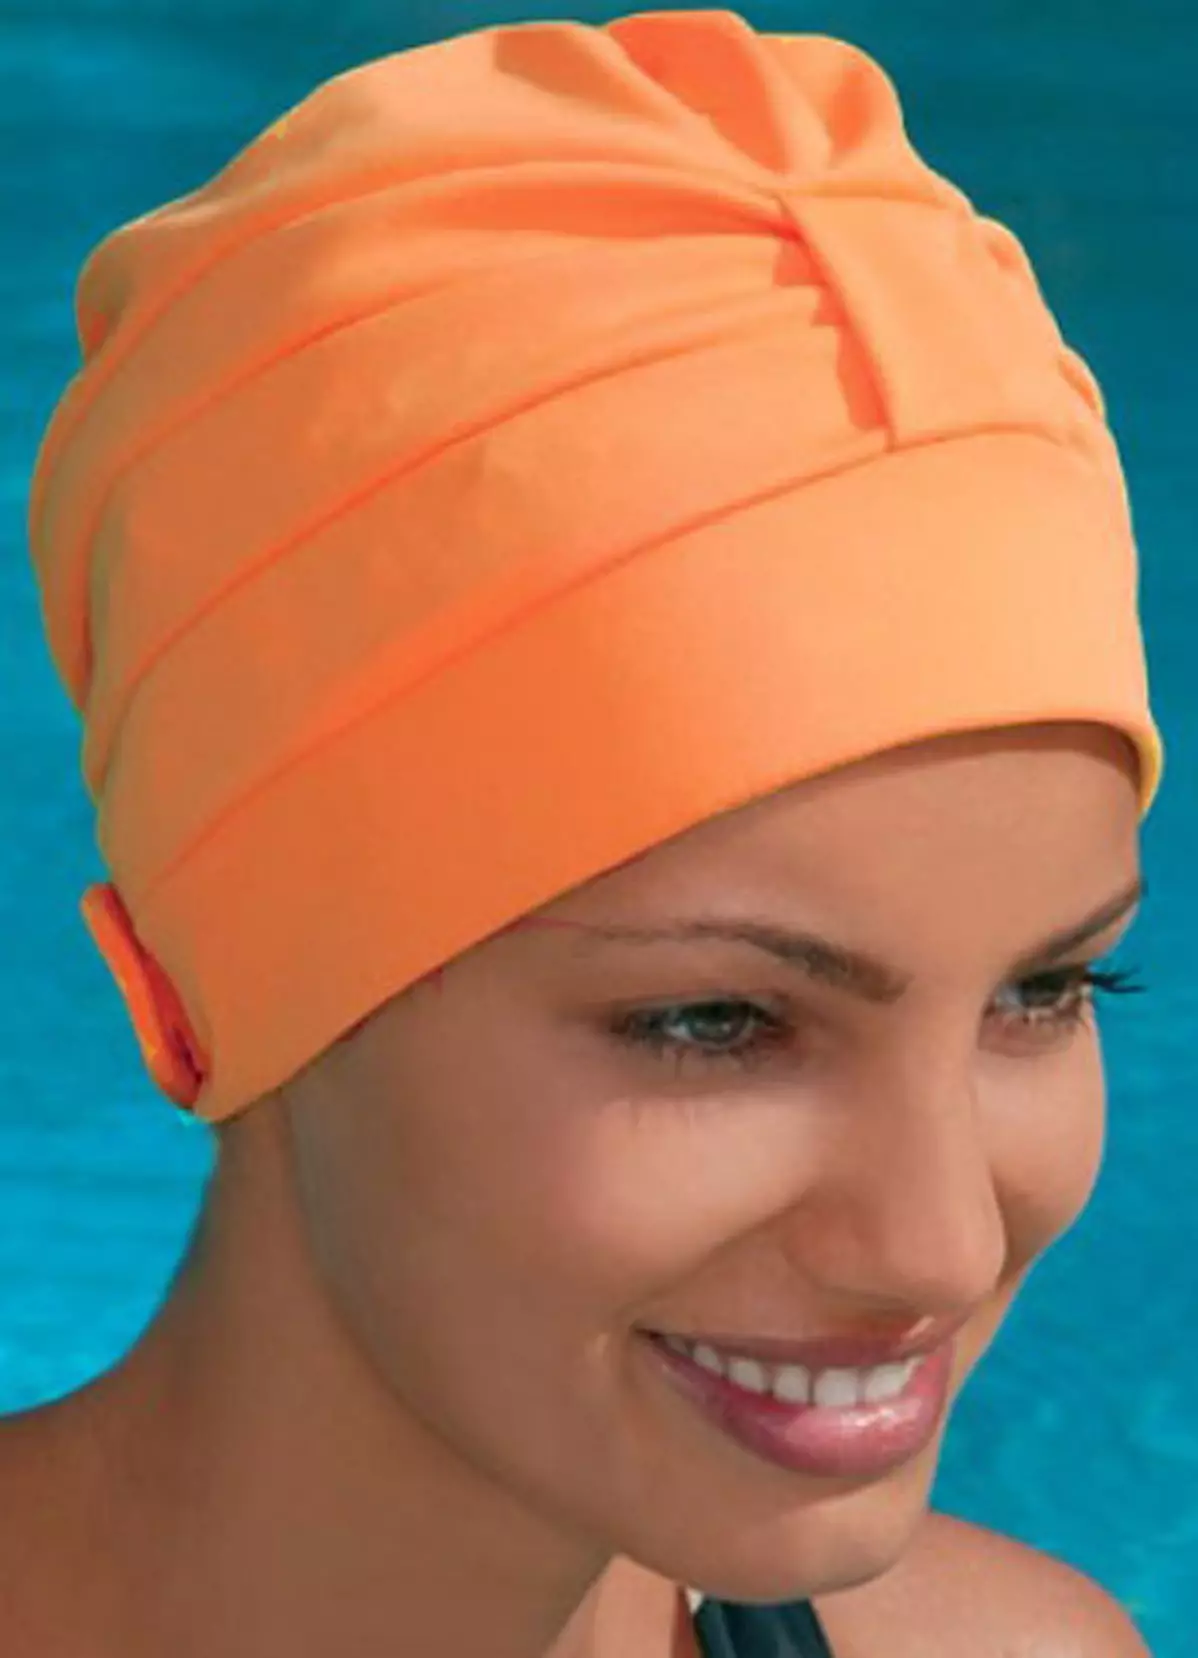 CAP עבור הבריכה (41 תמונות): איך לבחור כובע לשחייה כי לא עובר מים? עם פרחים ואוזניים, גדול וסרוג ומינים אחרים 8816_18